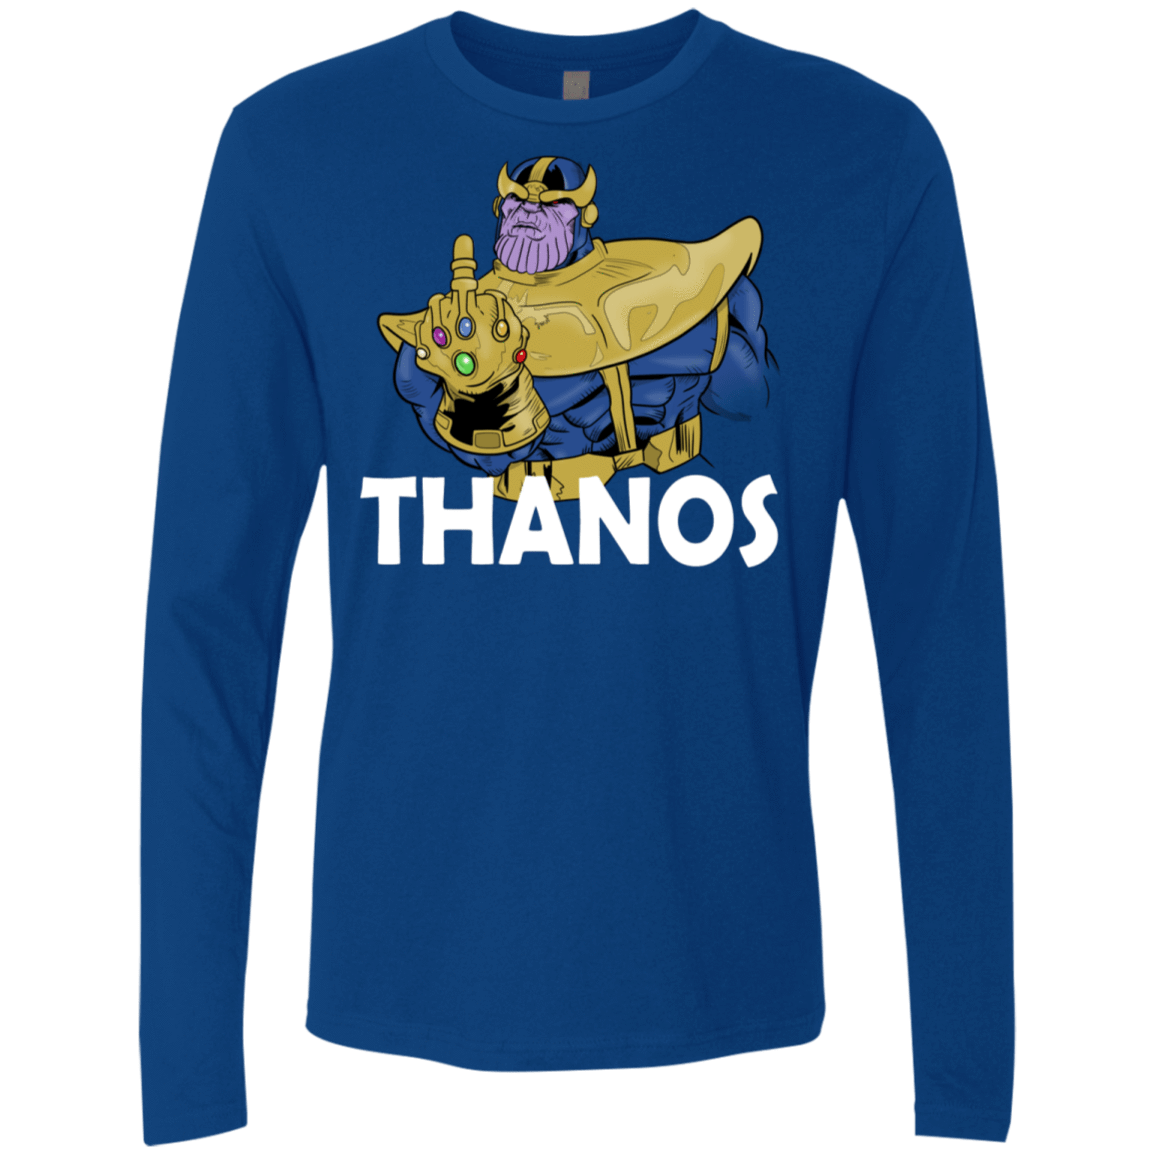 T-Shirts Royal / S Thanos Cash Men's Premium Long Sleeve